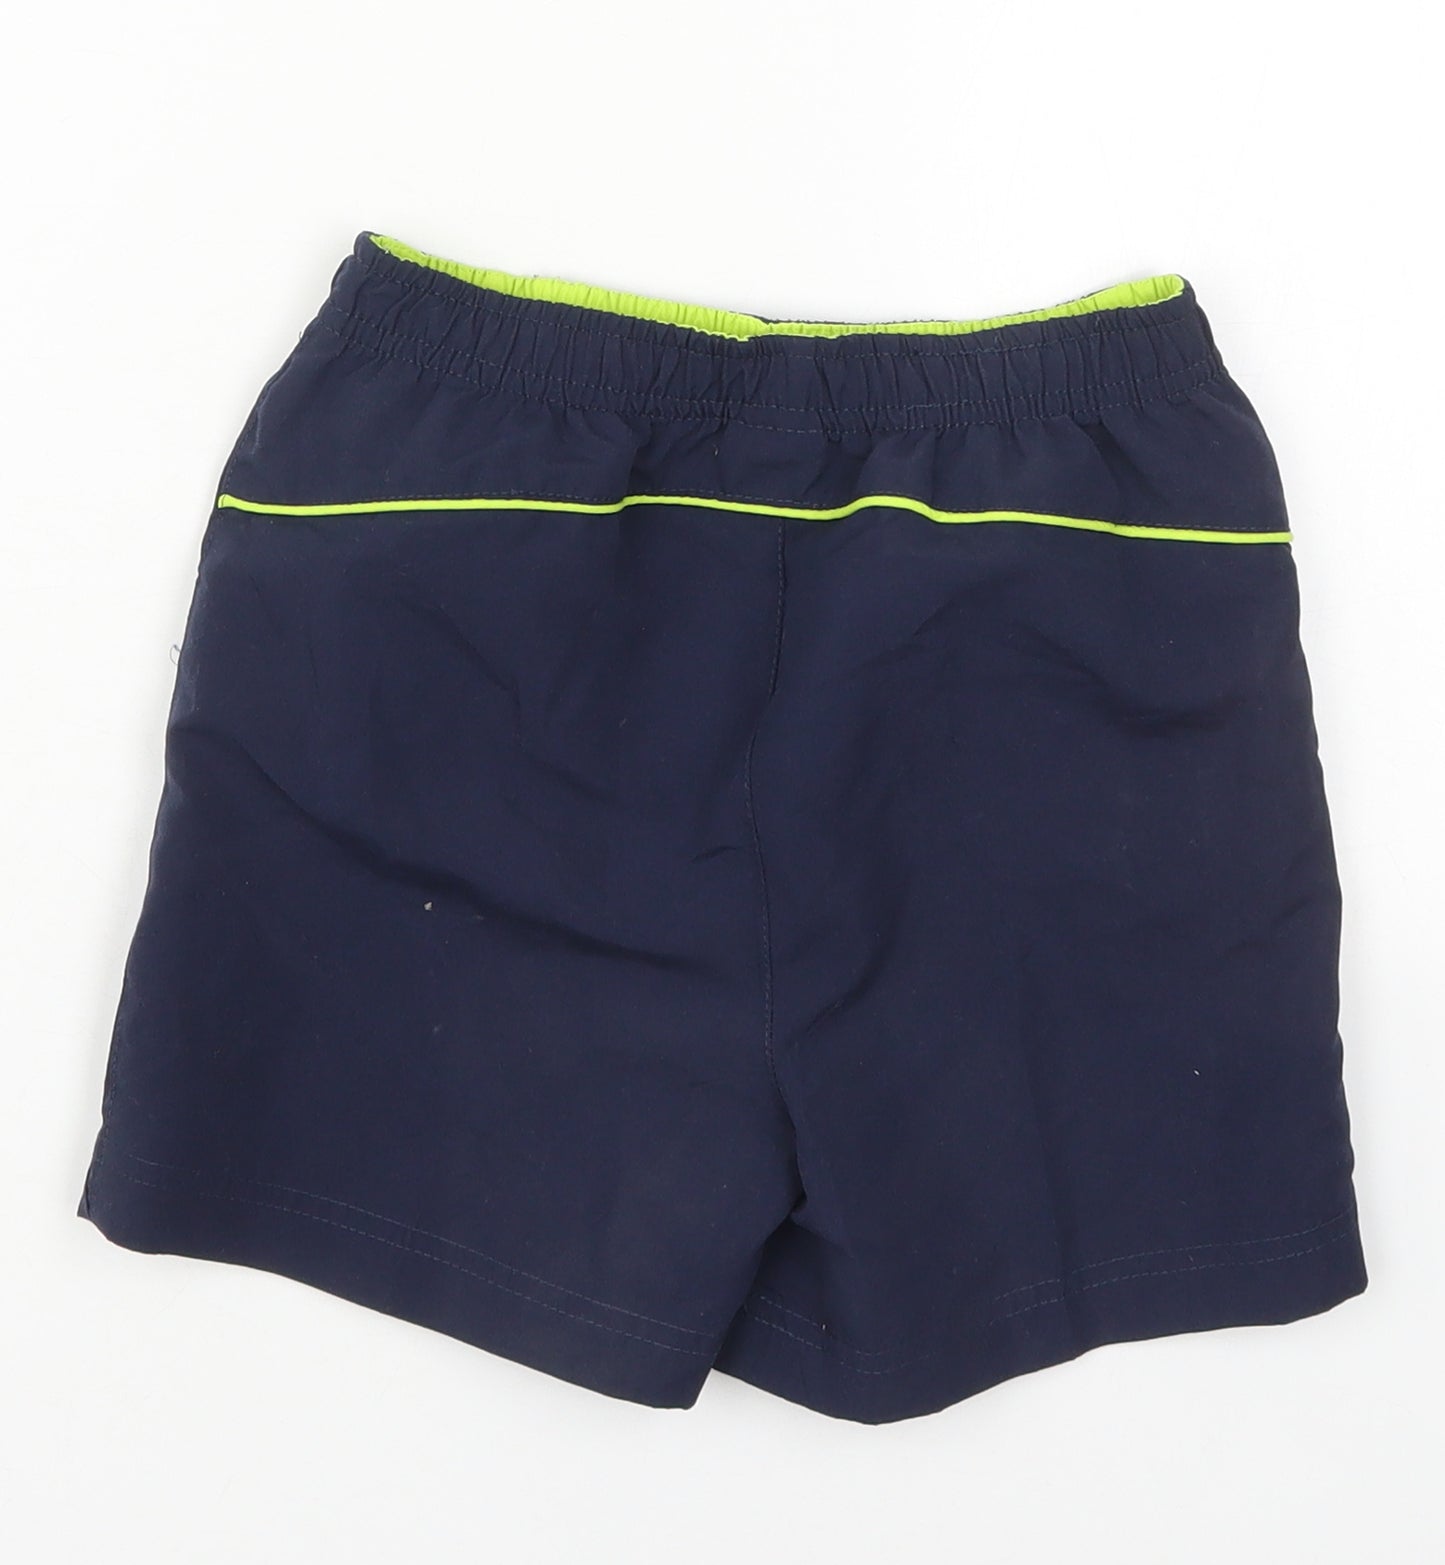 Slazenger Boys Blue  Polyester Utility Shorts Size 5-6 Years  Regular